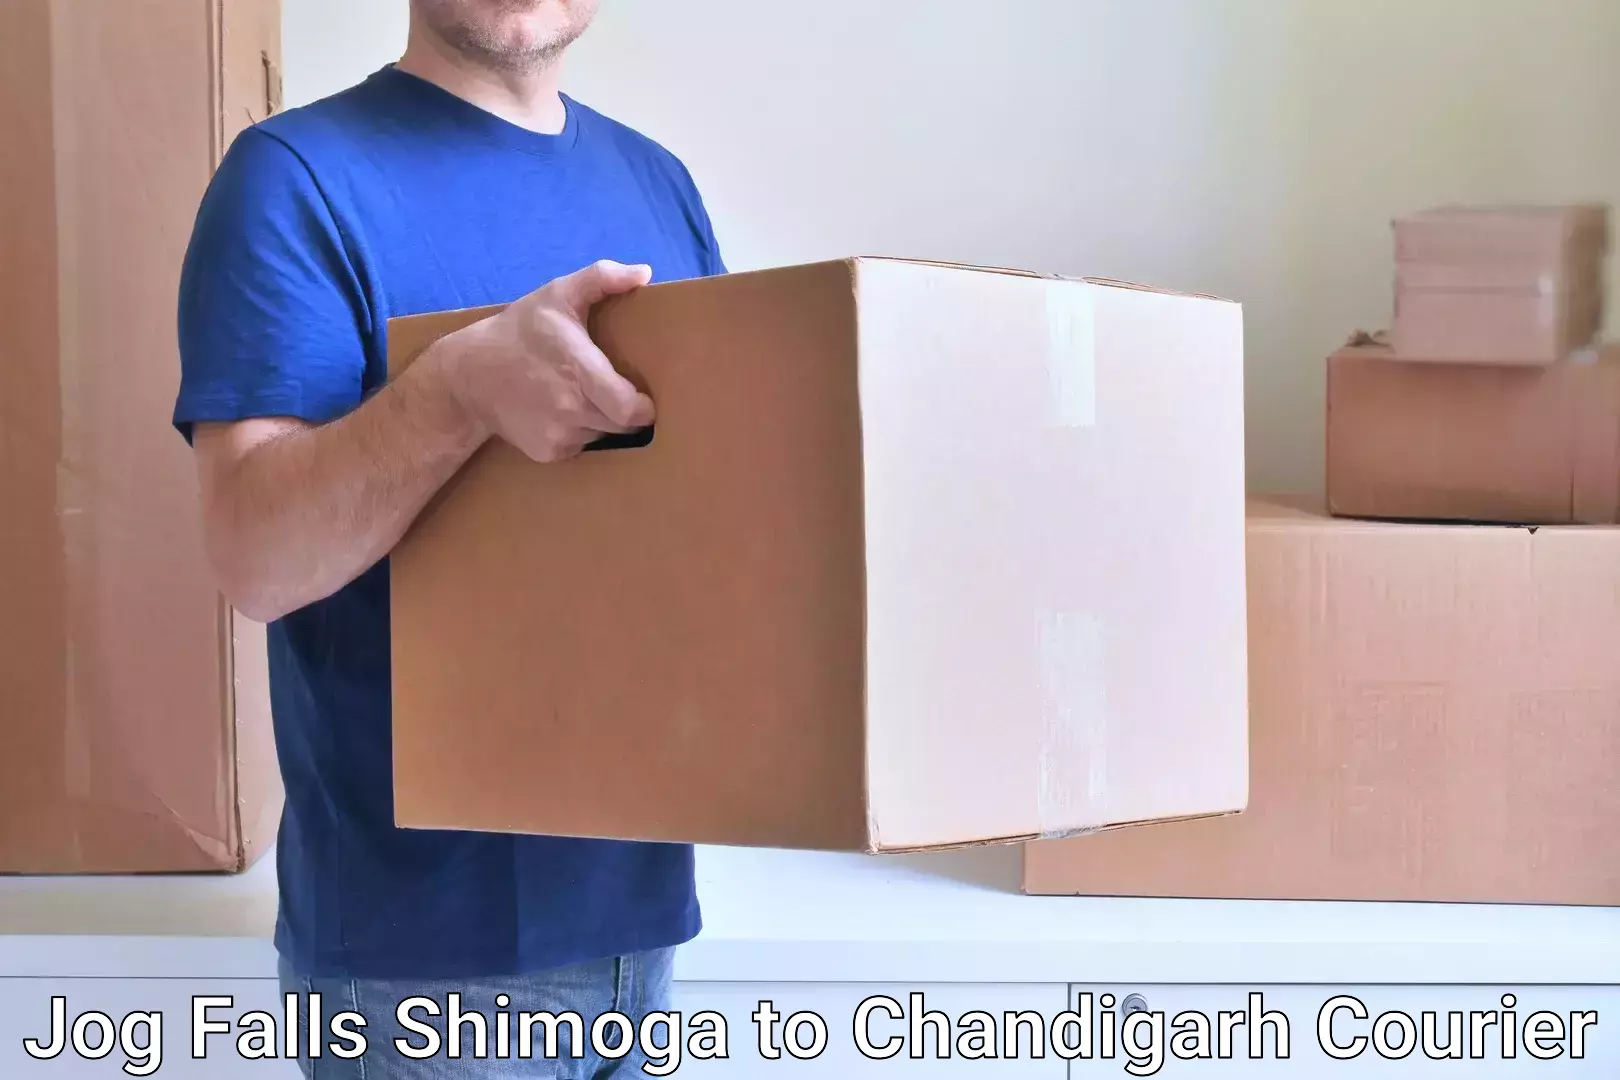 Courier service comparison Jog Falls Shimoga to Chandigarh